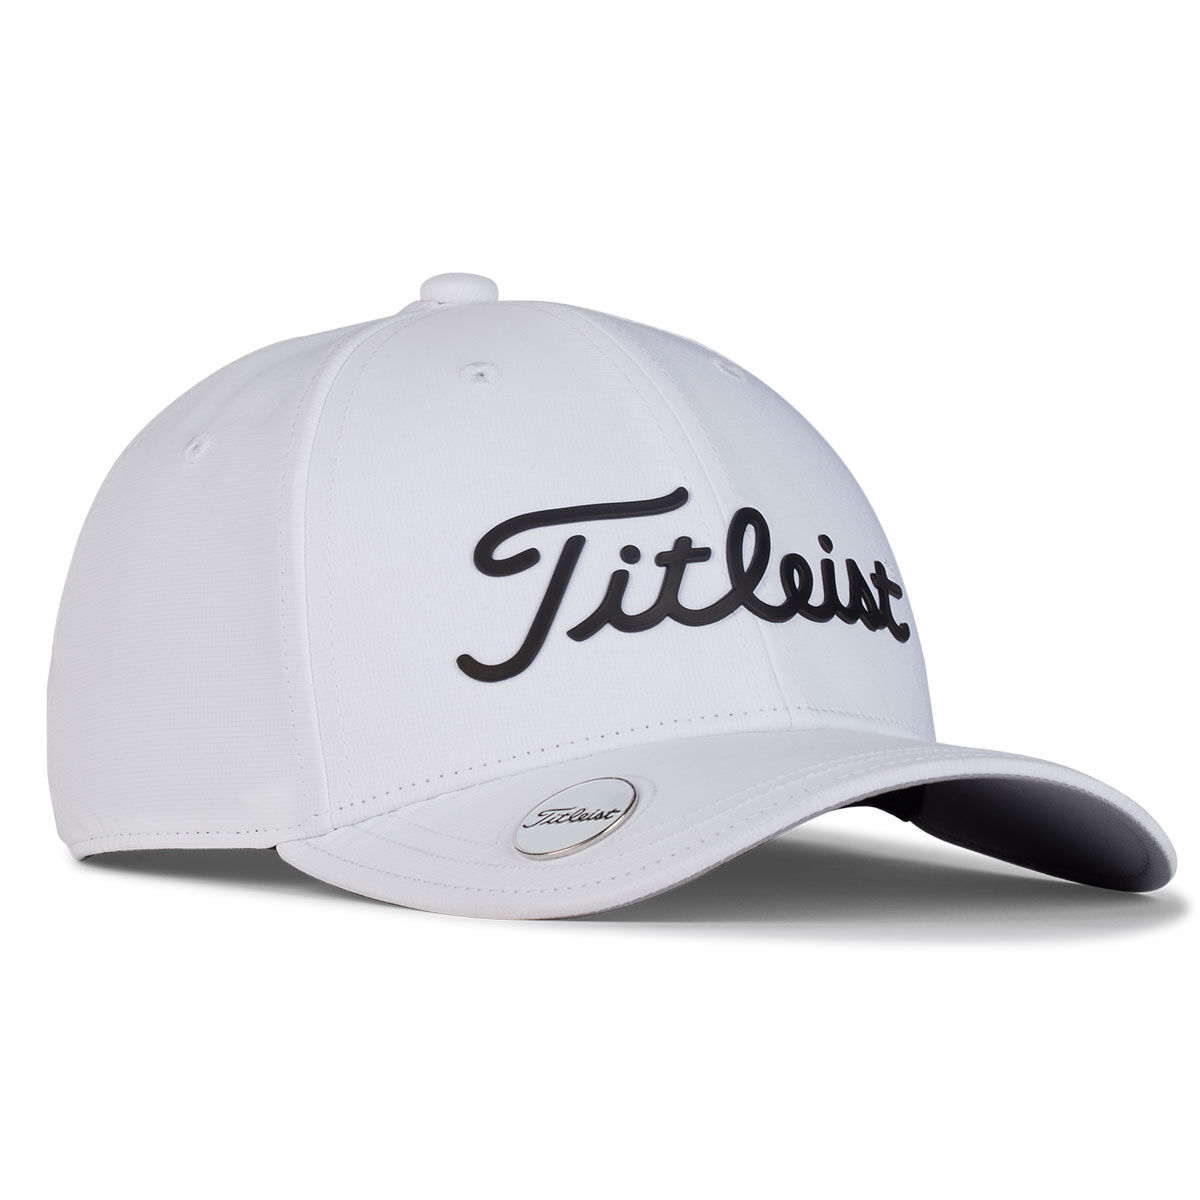 Titleist White and Black Comfortable Logo Print Players Performance Ball Marker Junior Golf Cap | American Golf, One Size von Titleist